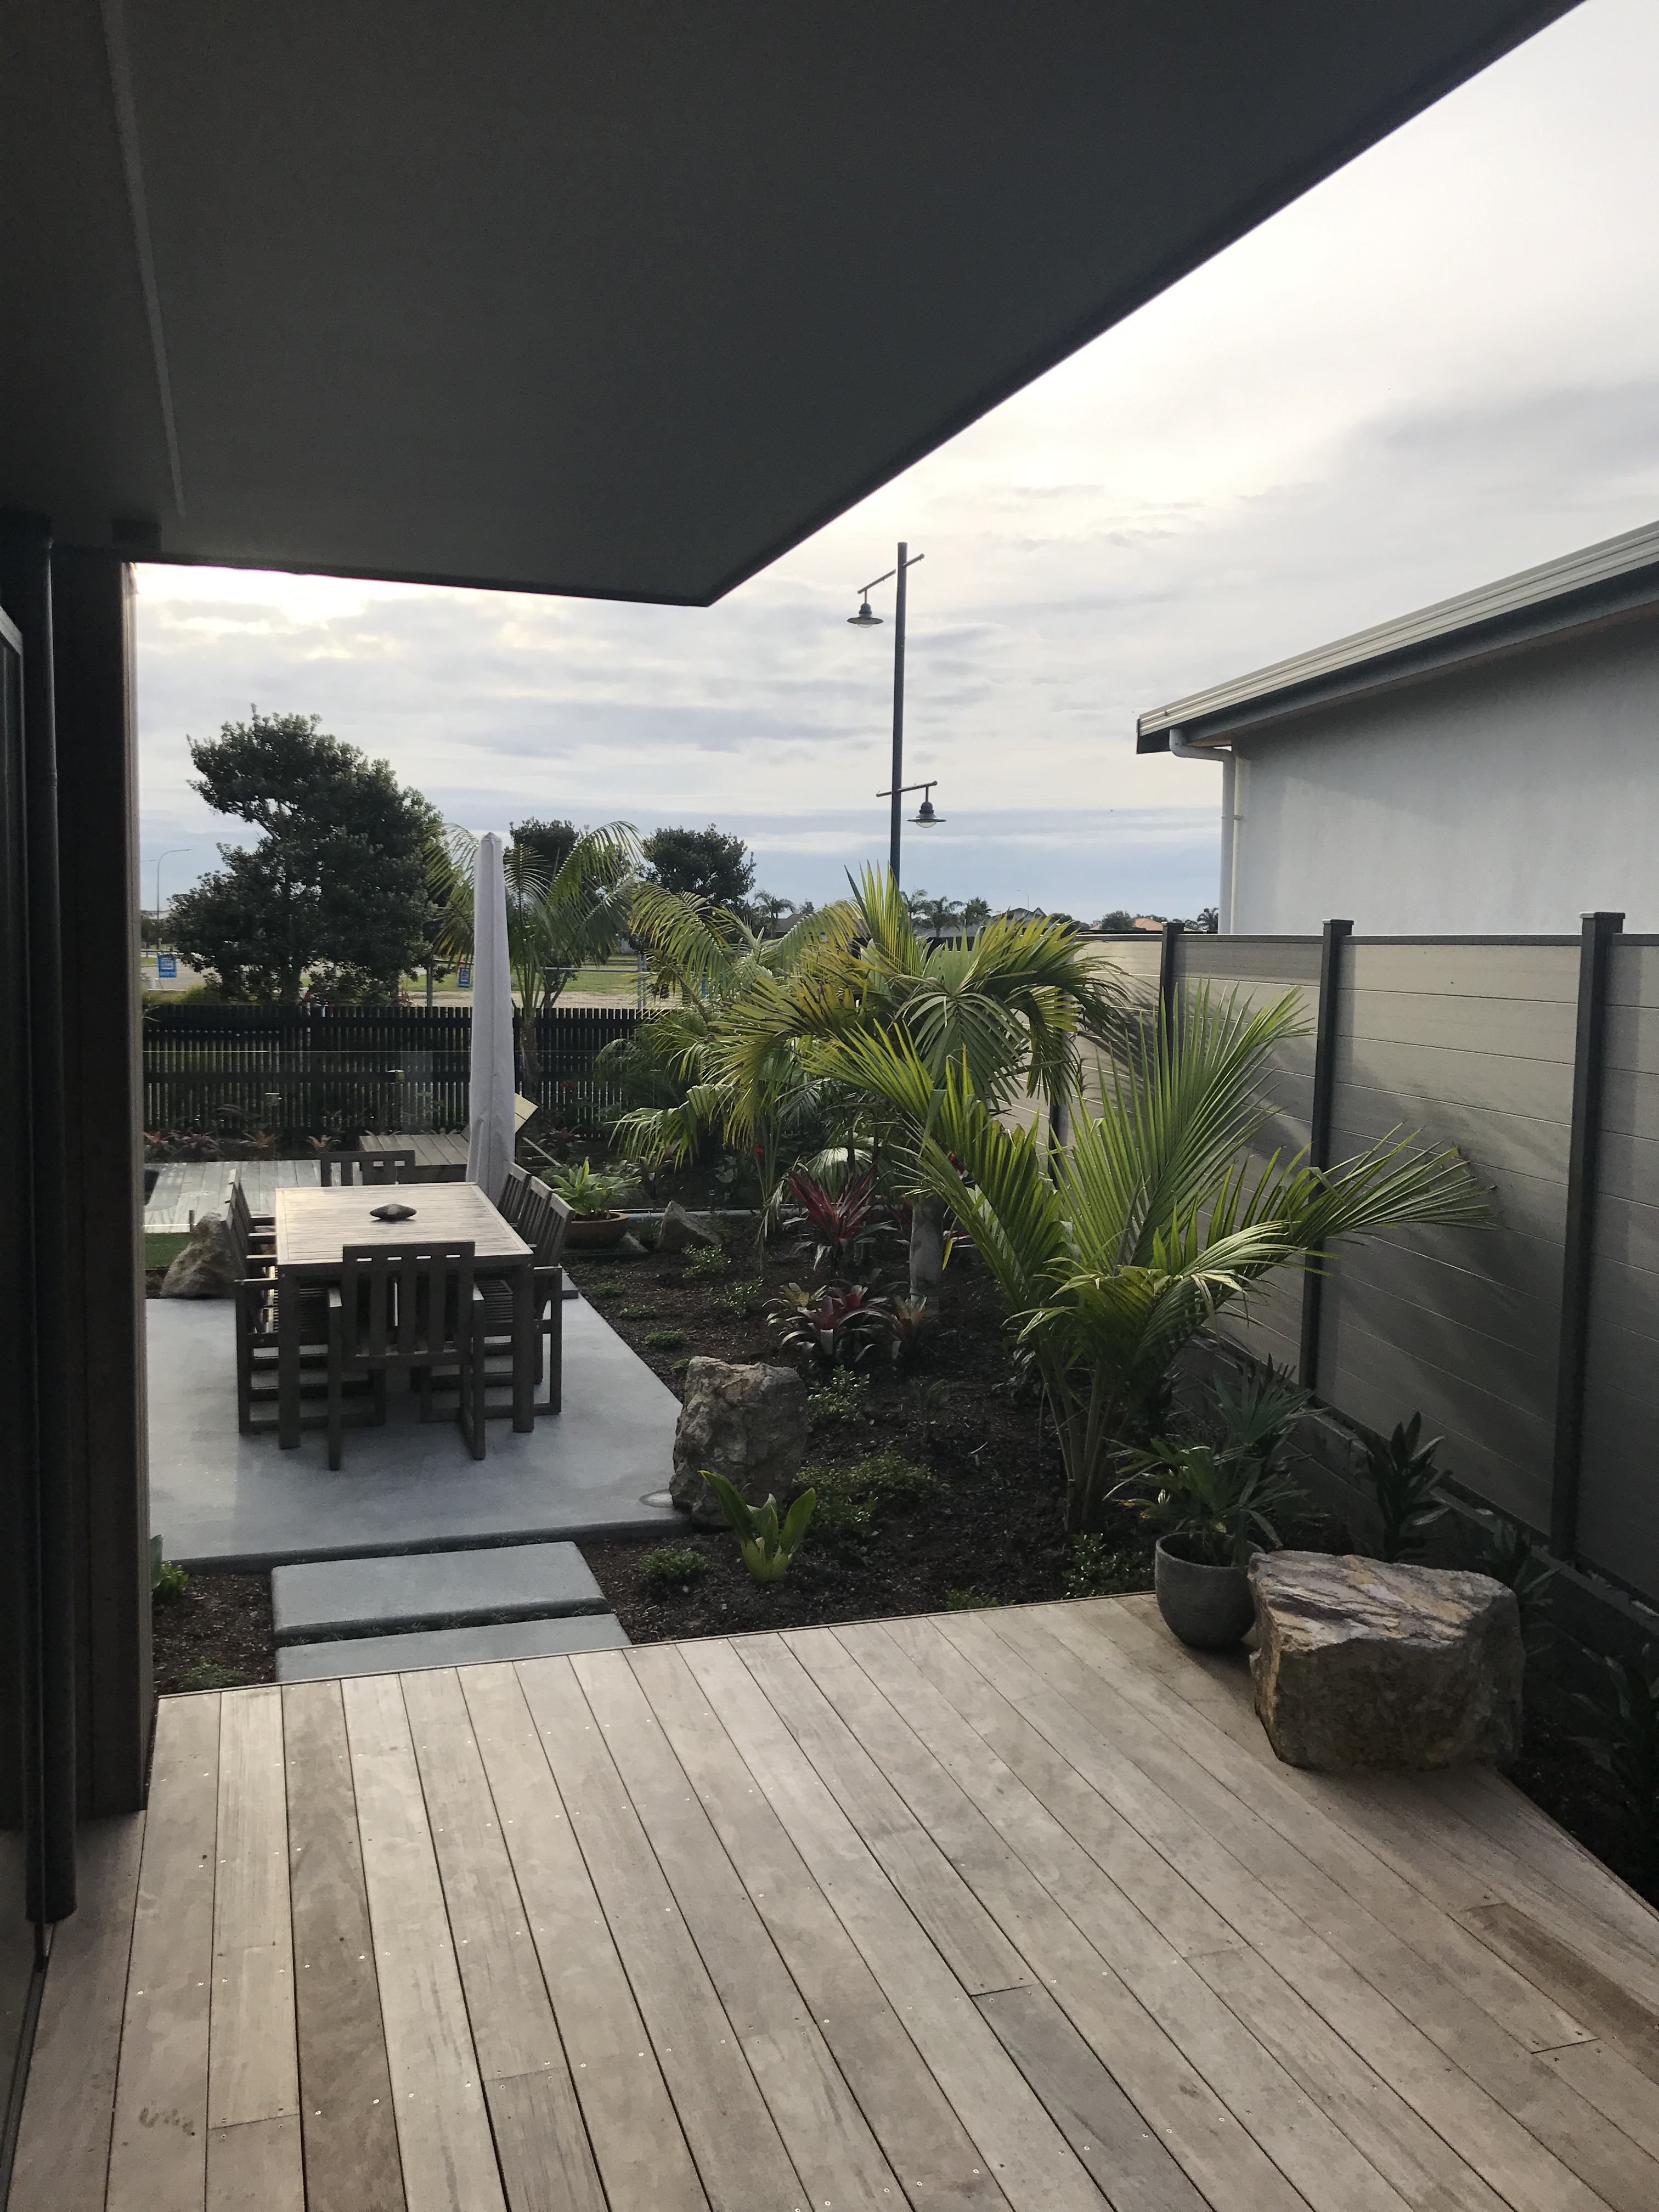 Decking, Concrete patio, Tropical planting